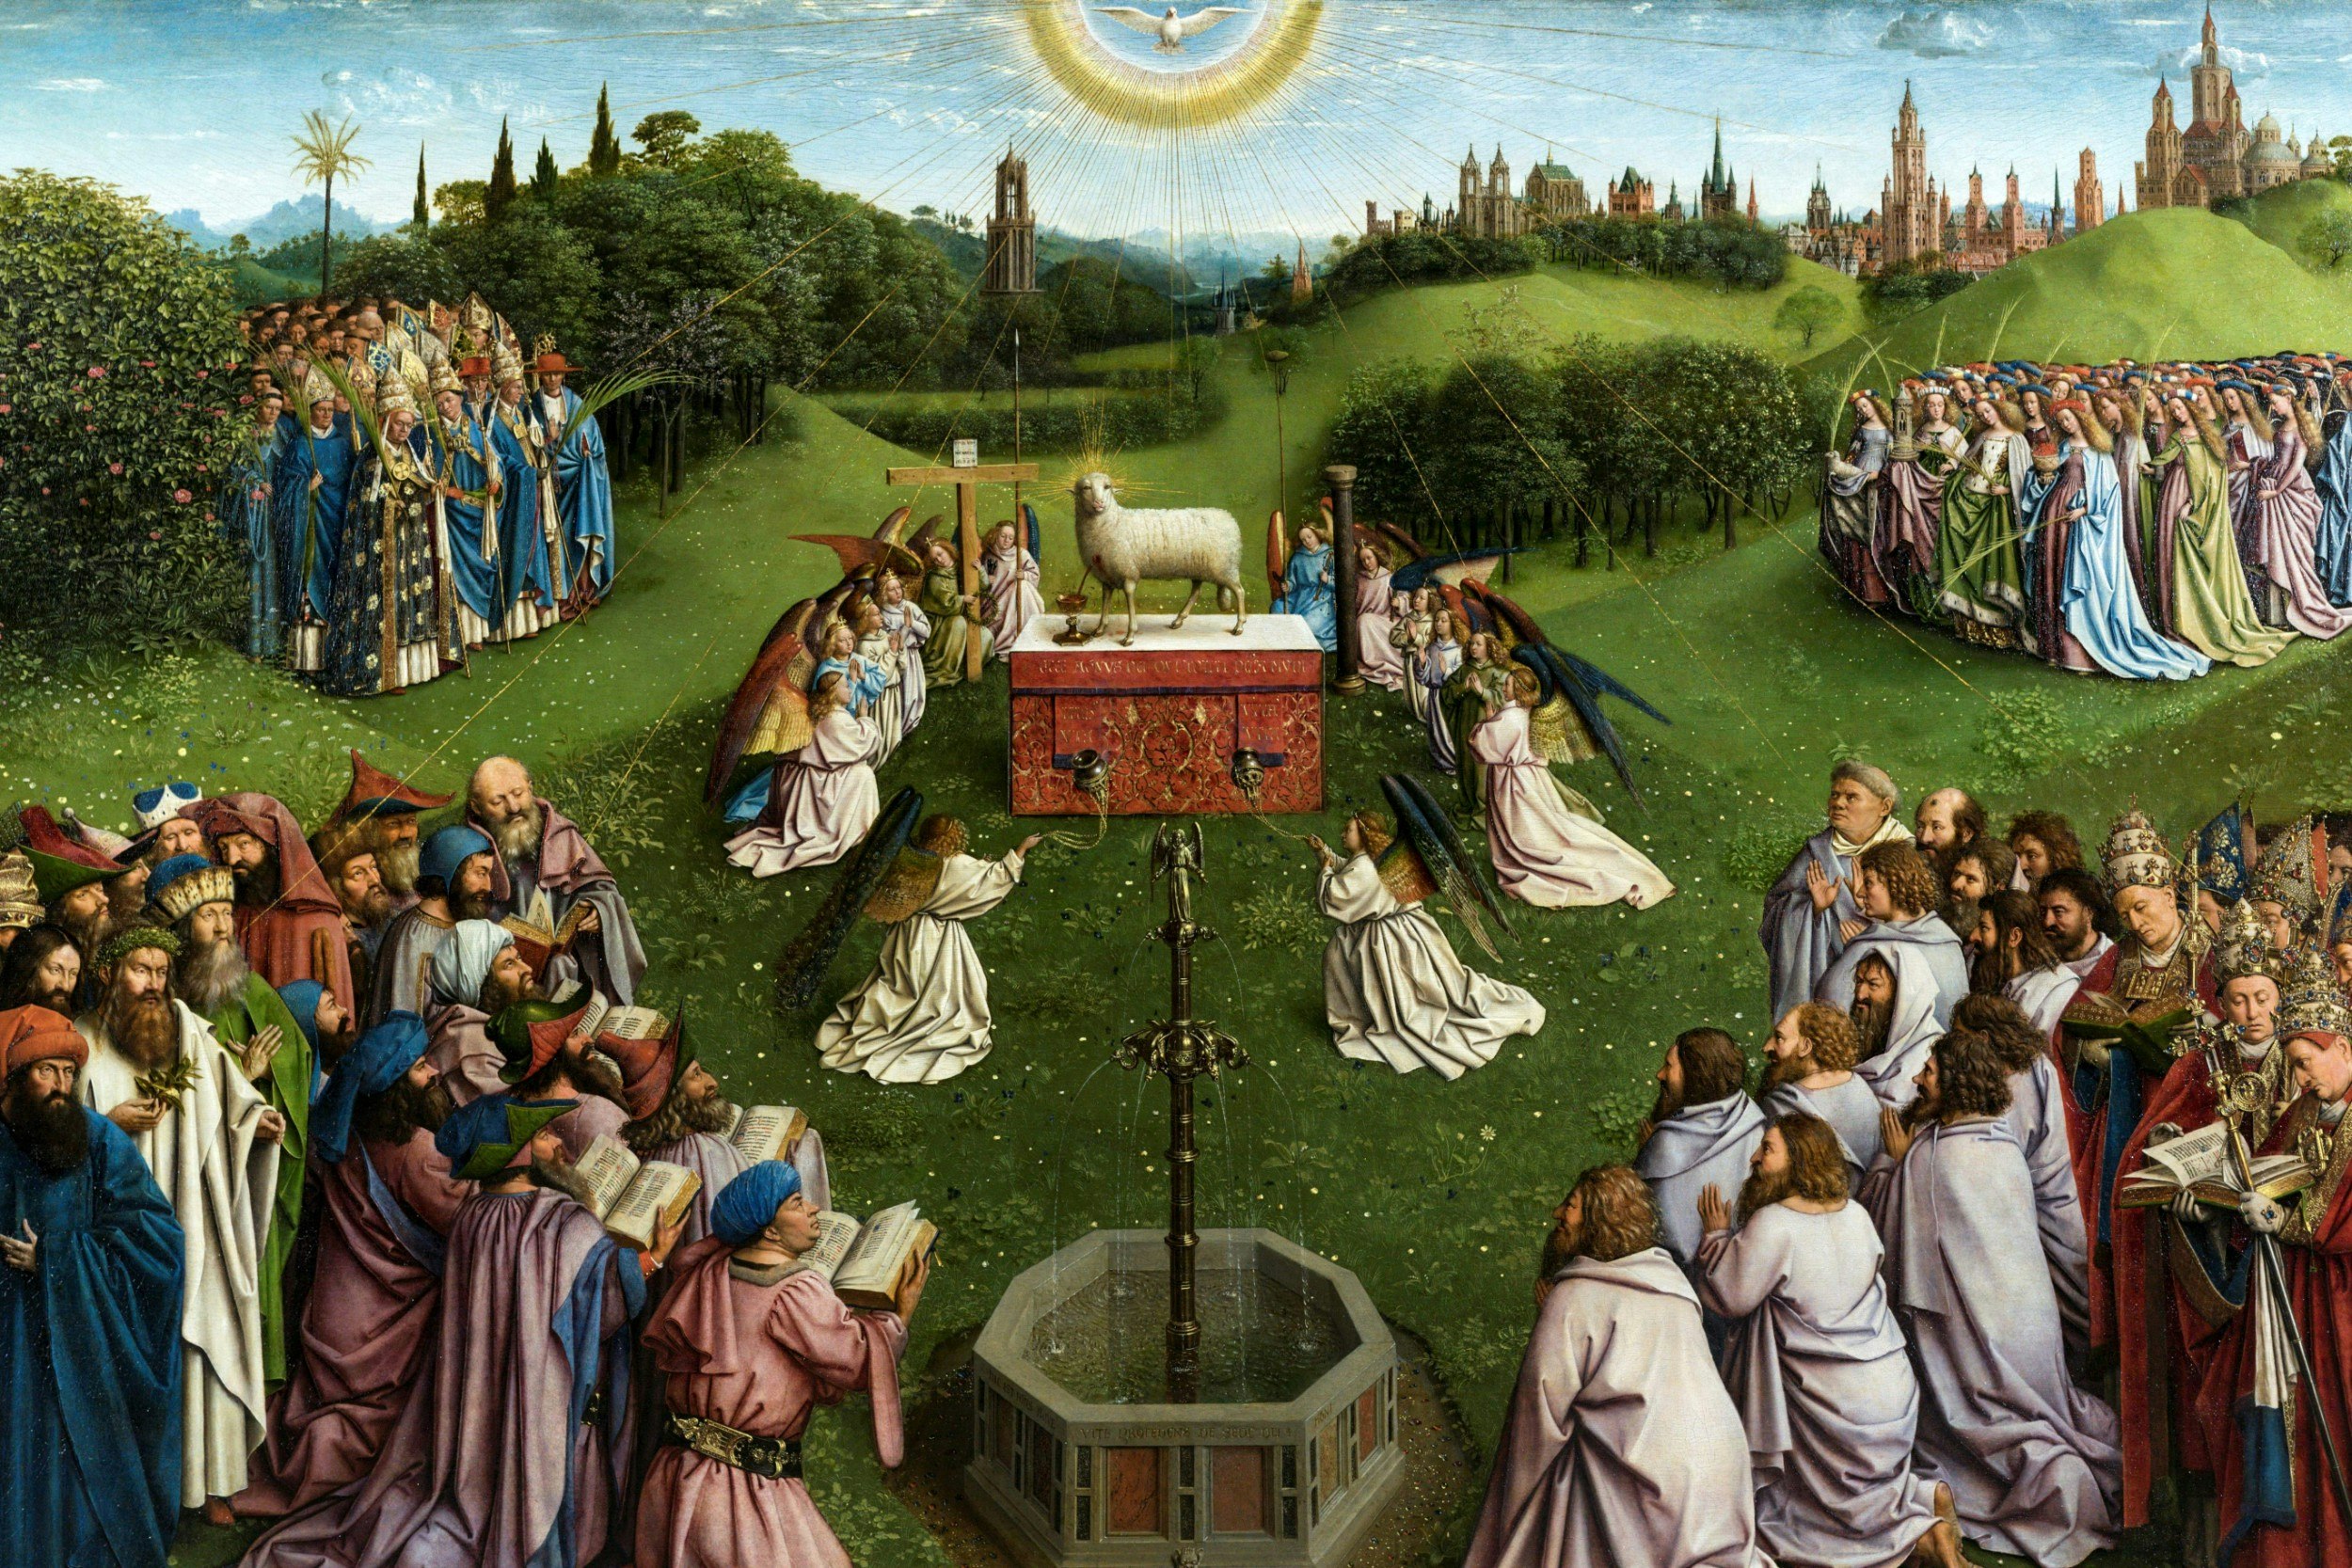 The restored original of 'Adoration of the Mystic Lamb' altarpiece (1432)